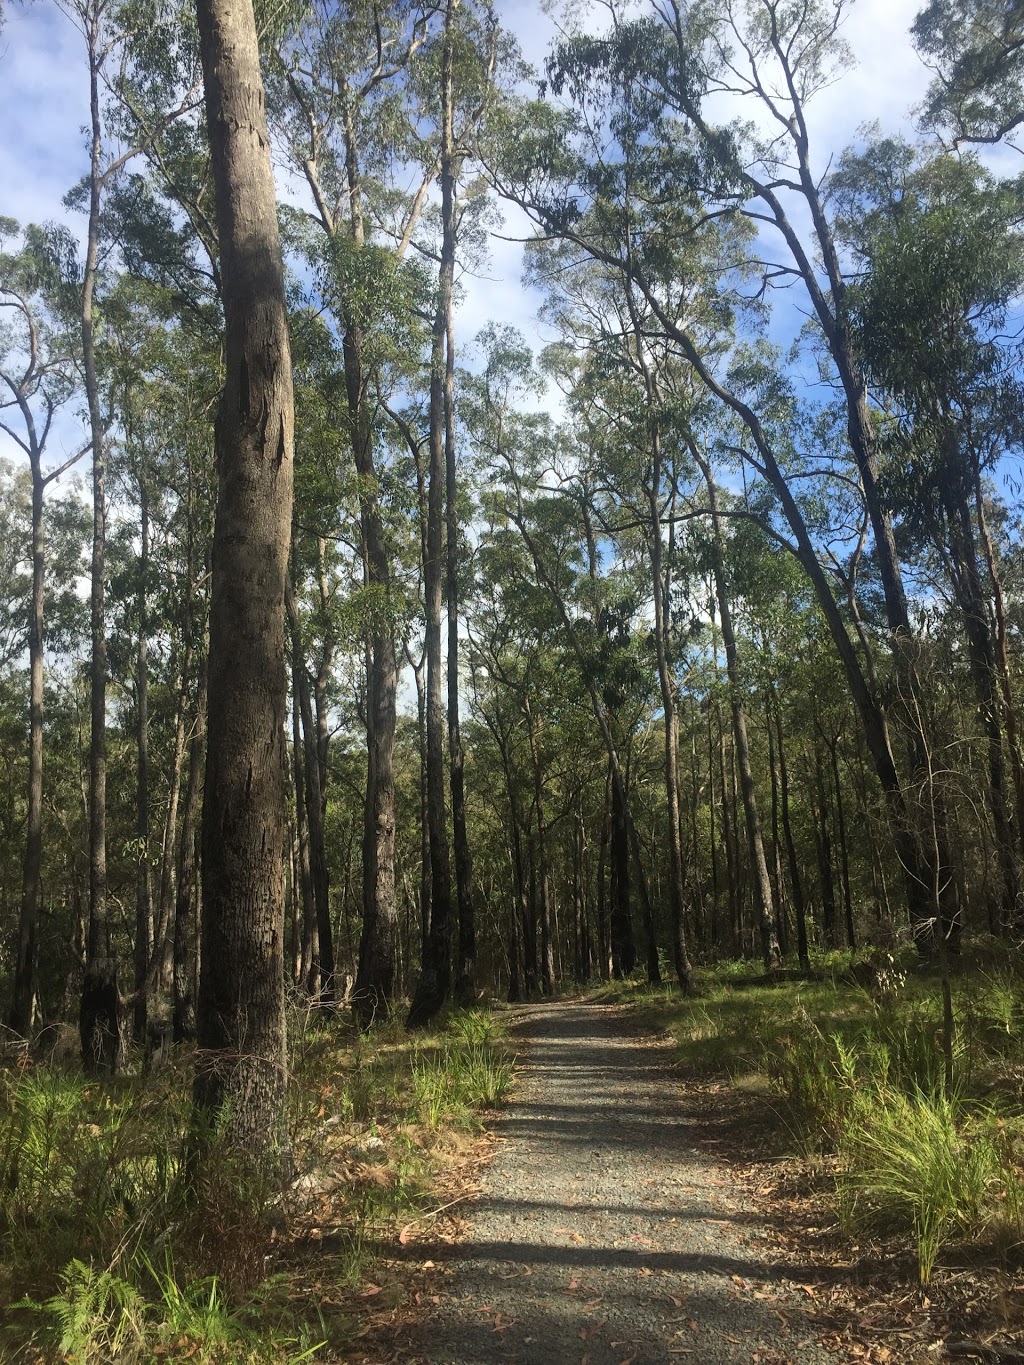 Bruthen Walking Trails | park | McLeans Loop, Bruthen VIC 3885, Australia